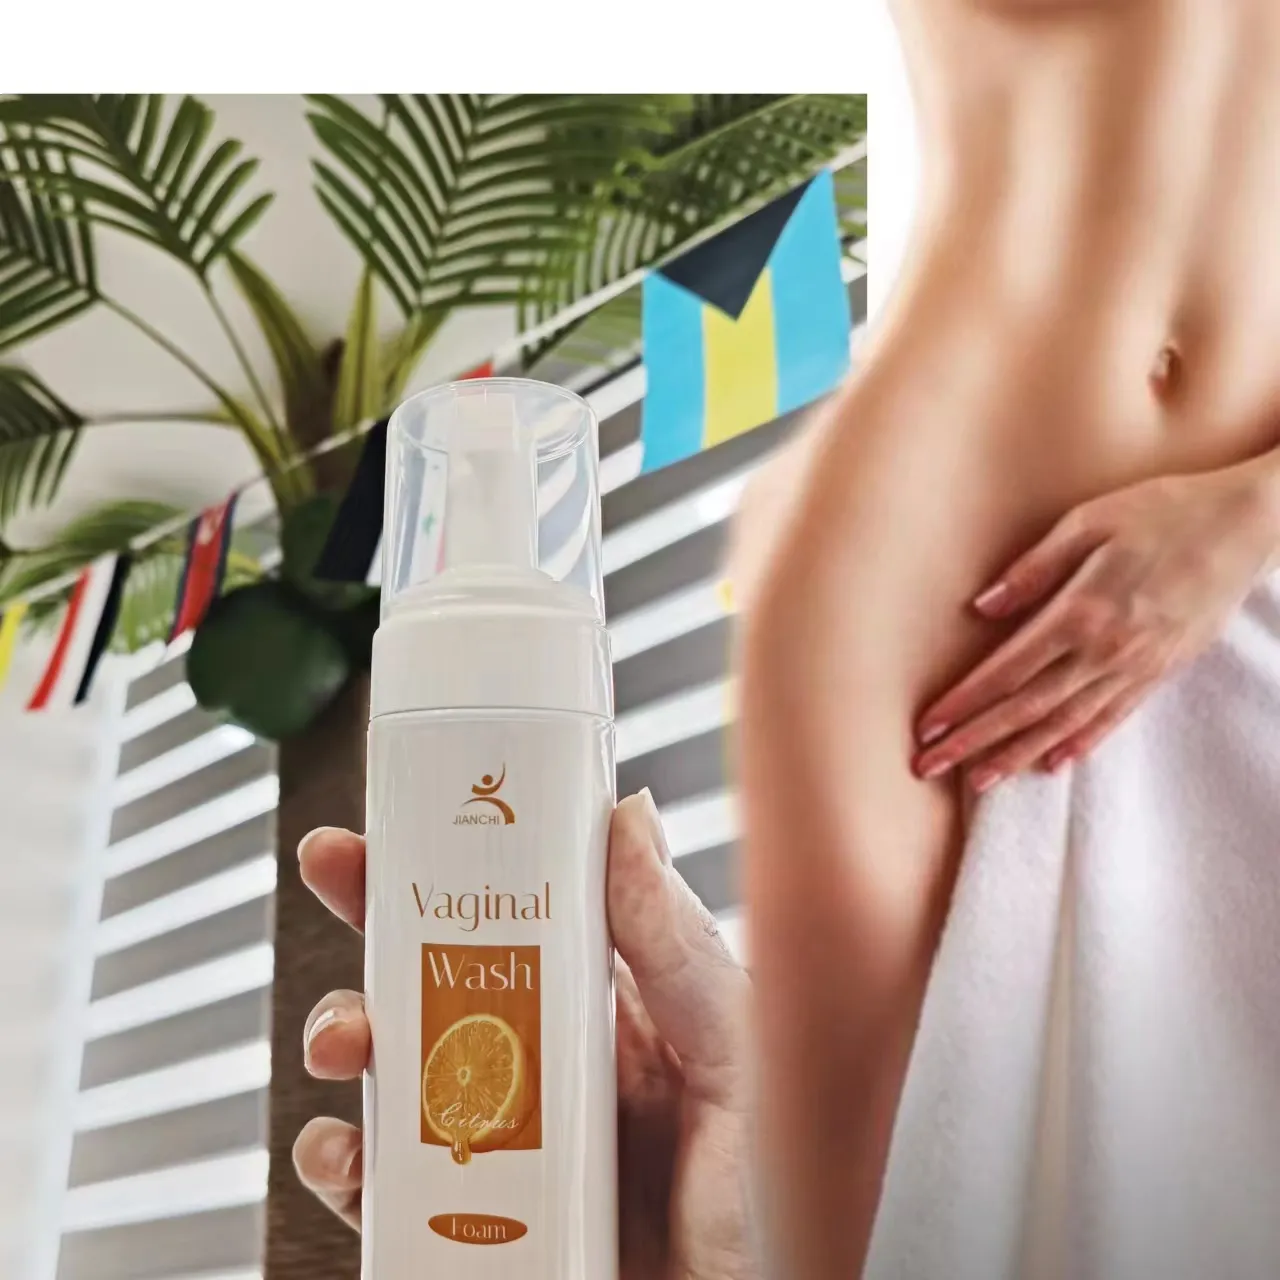 Jianchi Brand Feminine Washes Deep Cleansing Vaginal Care Remove Odor Female Yoni Feminine Wash